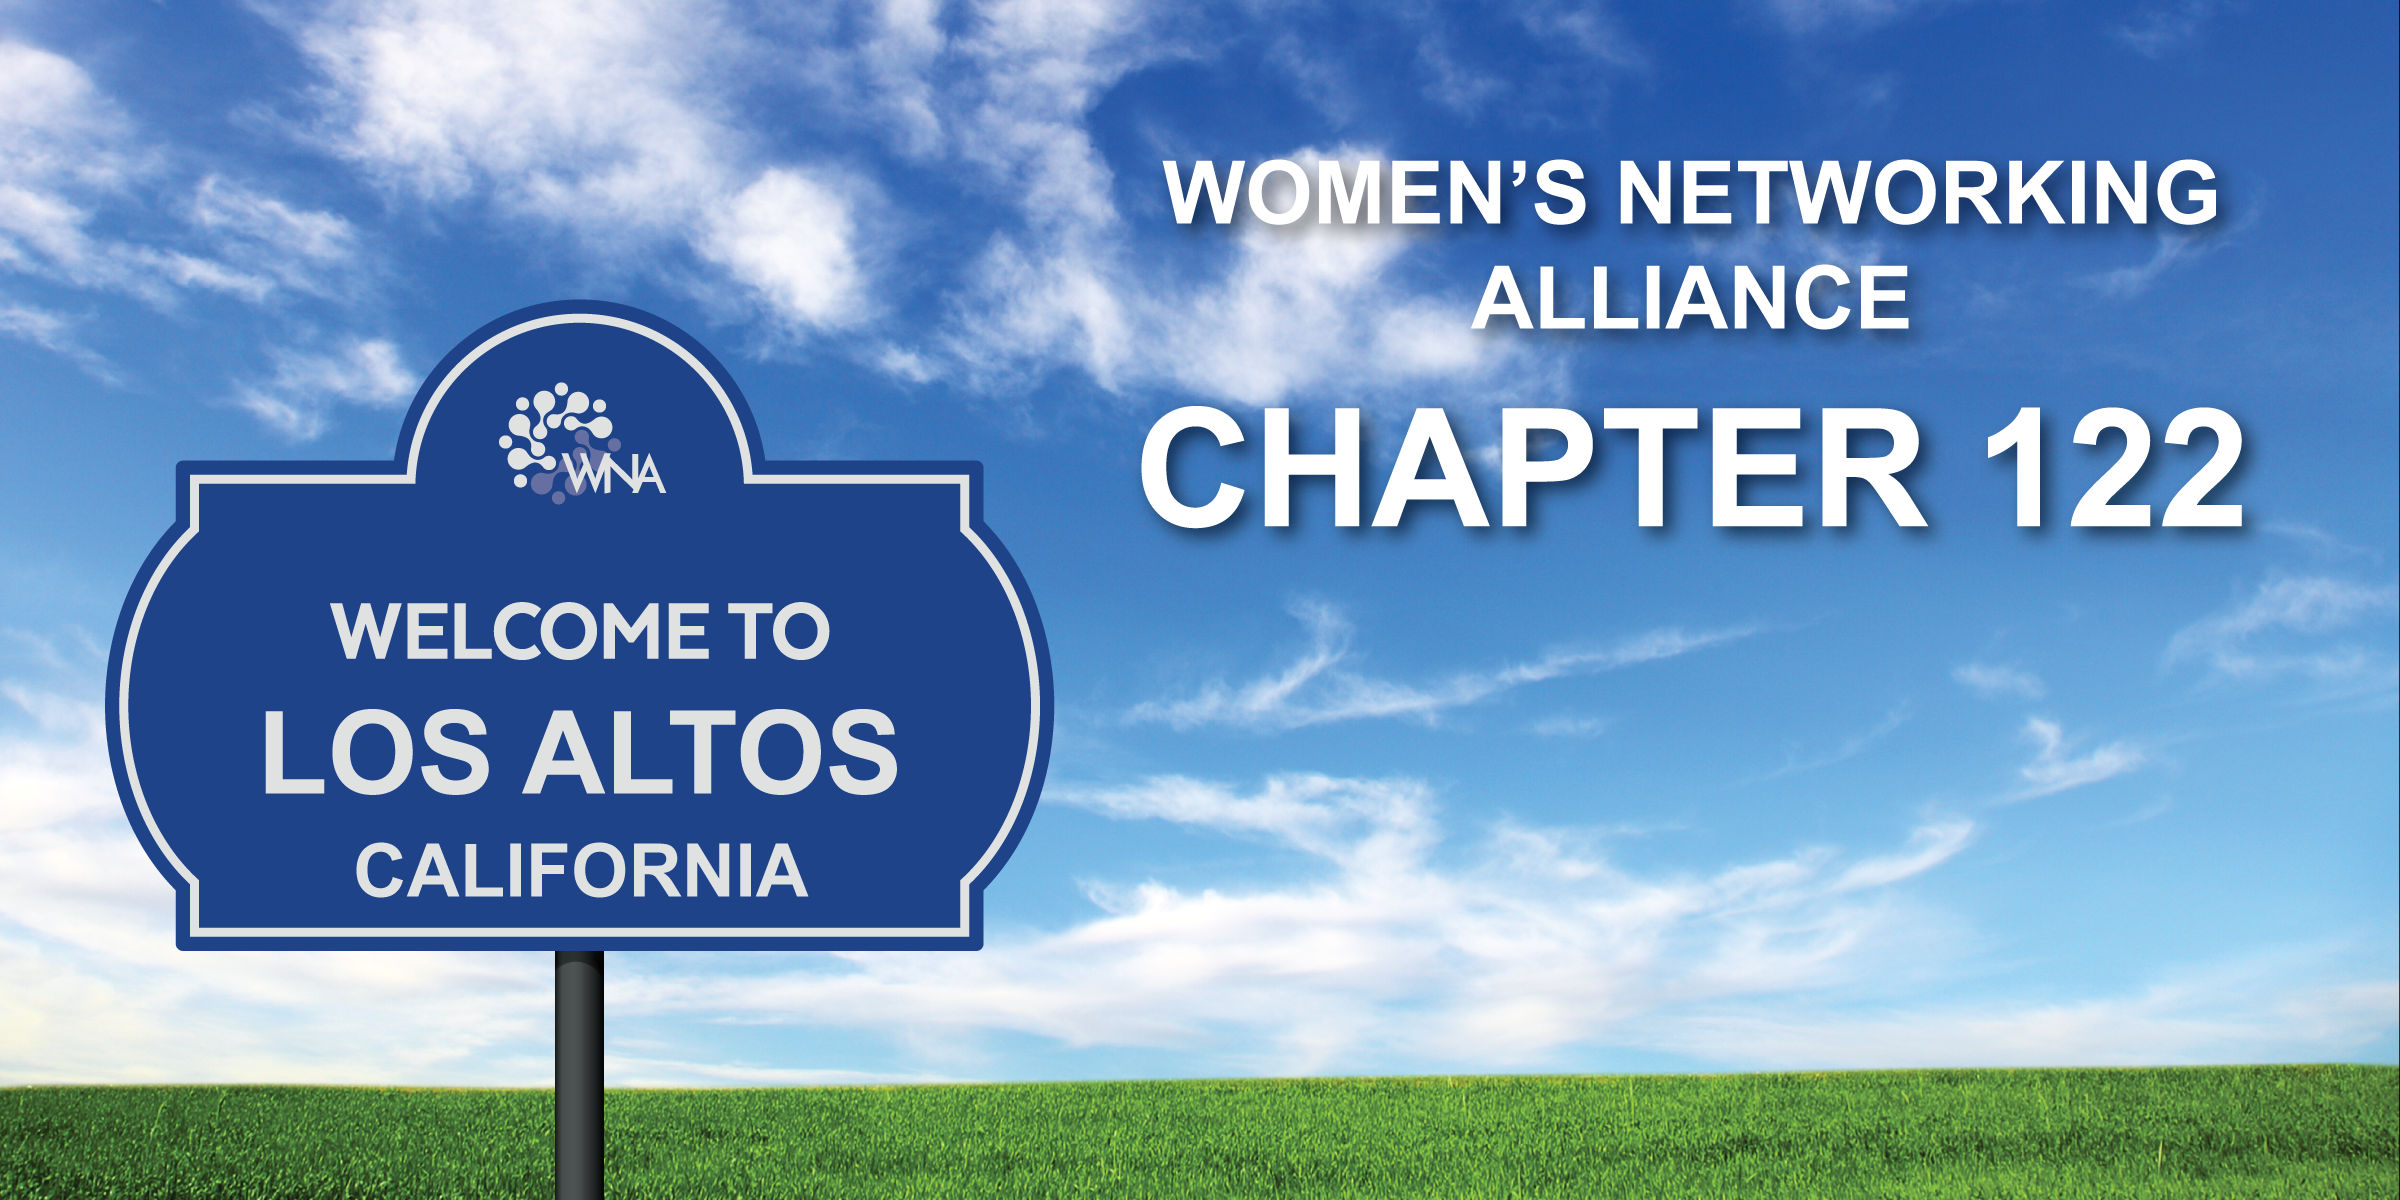 Women's Networking Alliance Ch. 122 Meeting (Los Altos, CA)